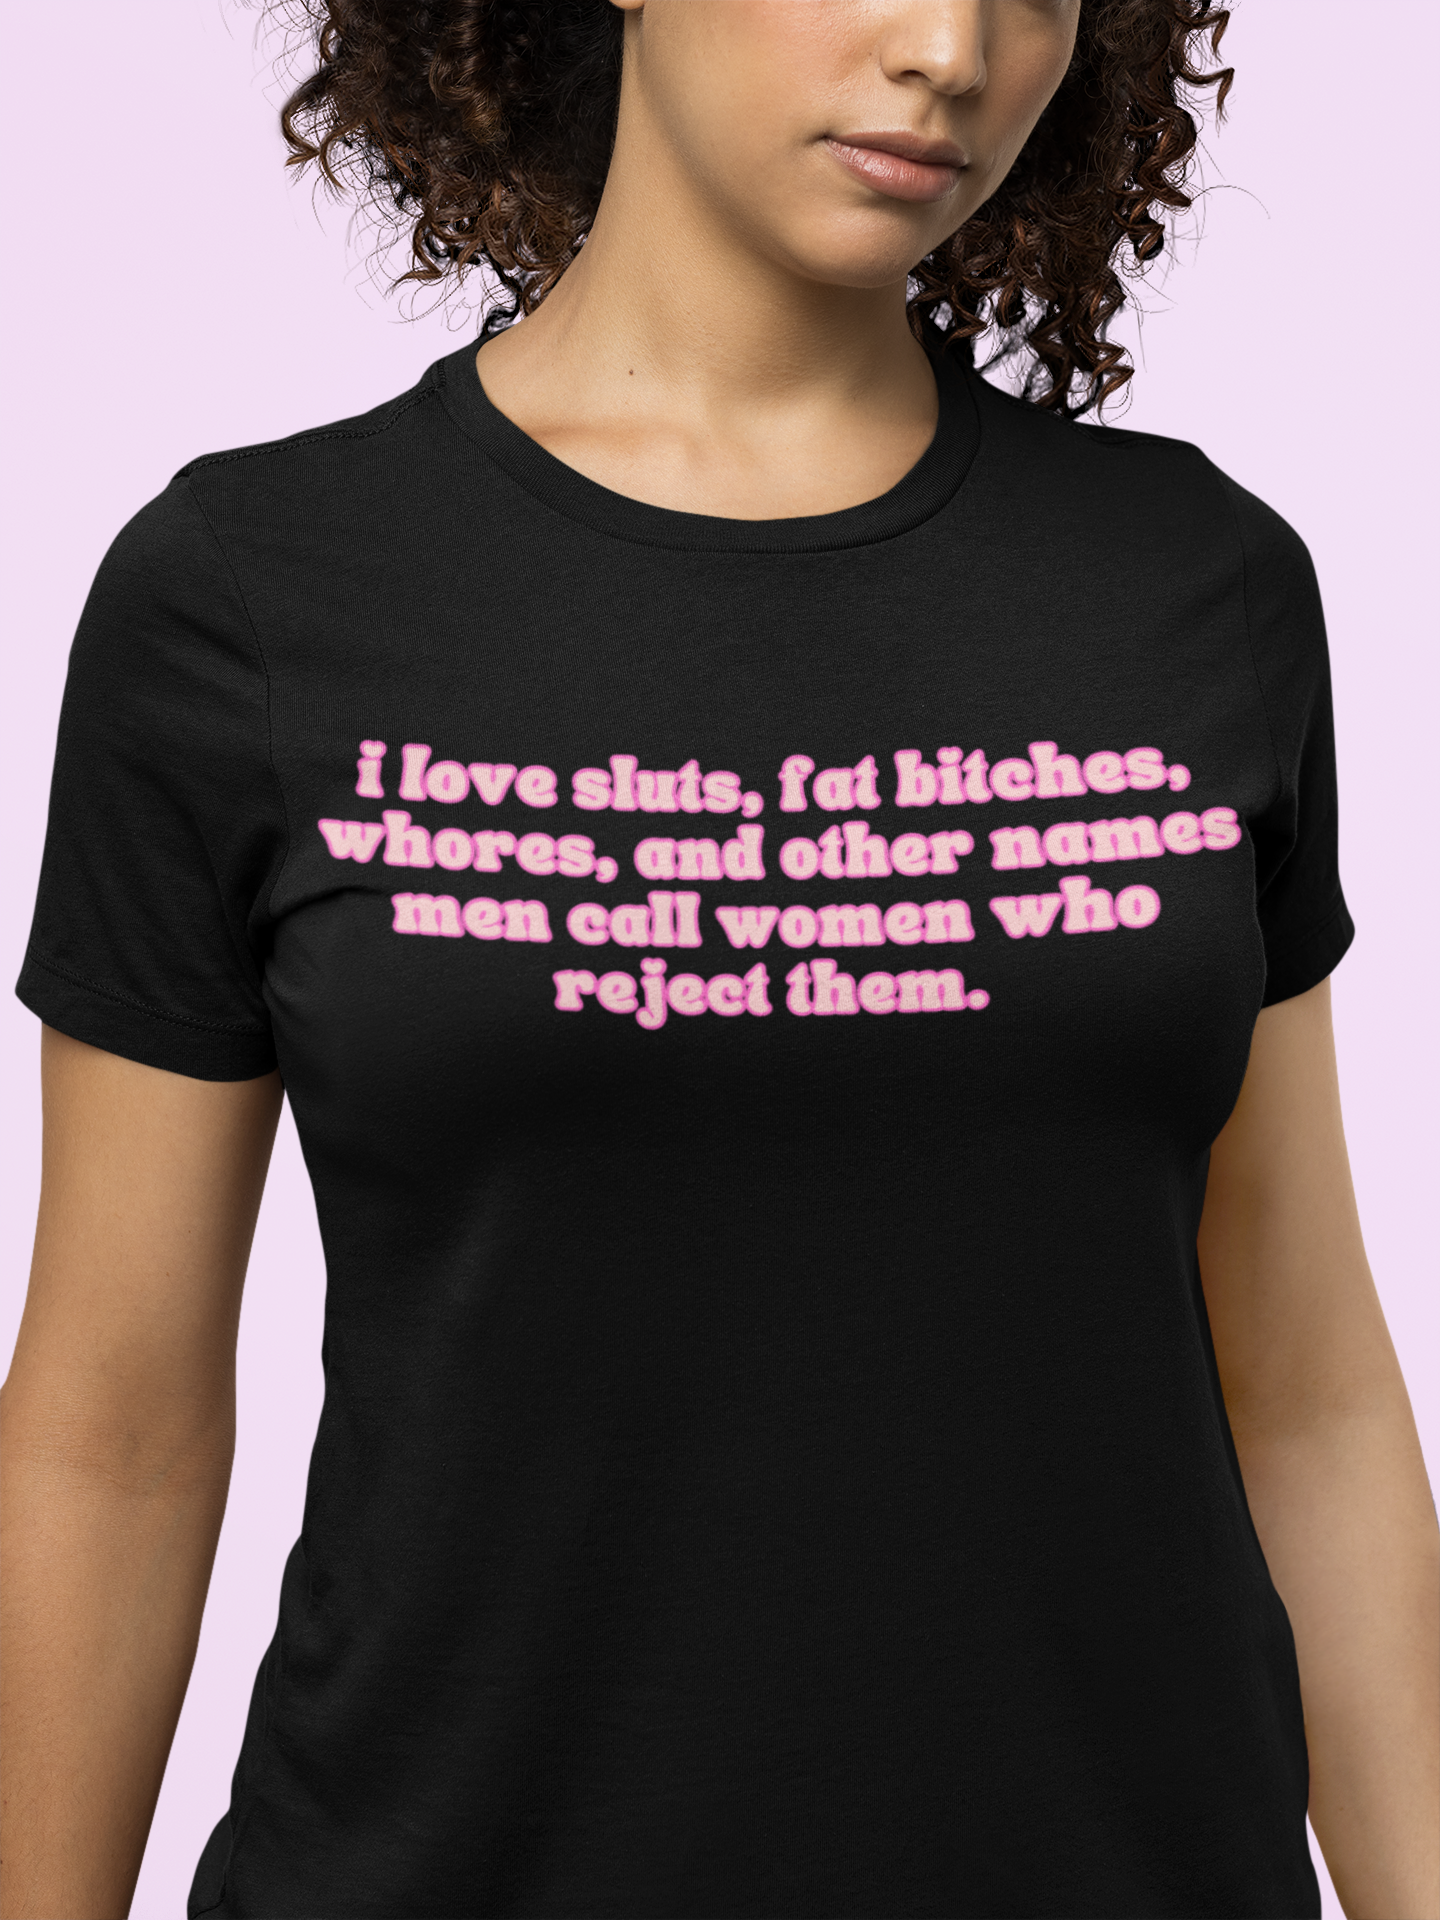 I Love Sluts Unisex Feminist T-shirt - Shop Women’s Rights T-shirts - Feminist Trash Store - Women’s Oversized Black T-shirt